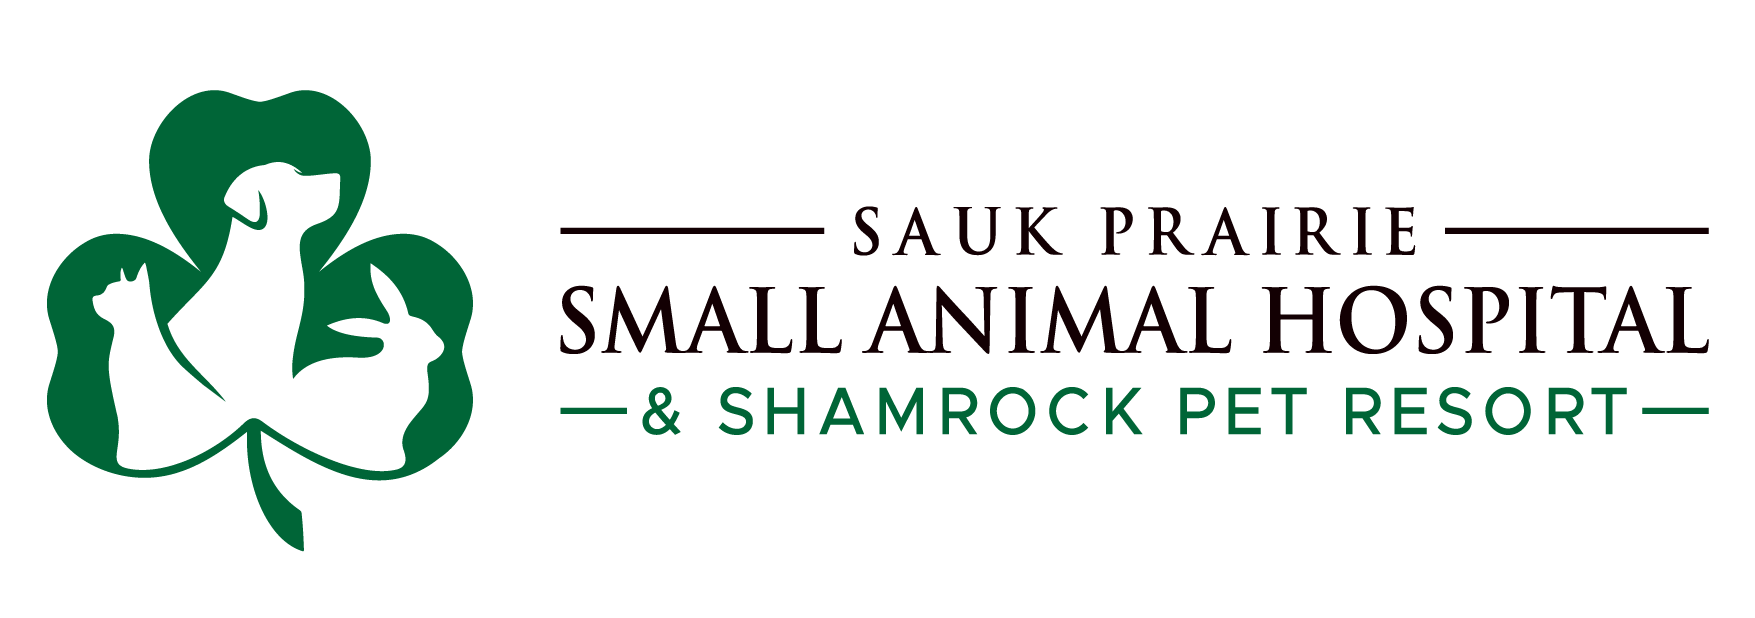 Sauk Prairie Small Animal Hospital Logo